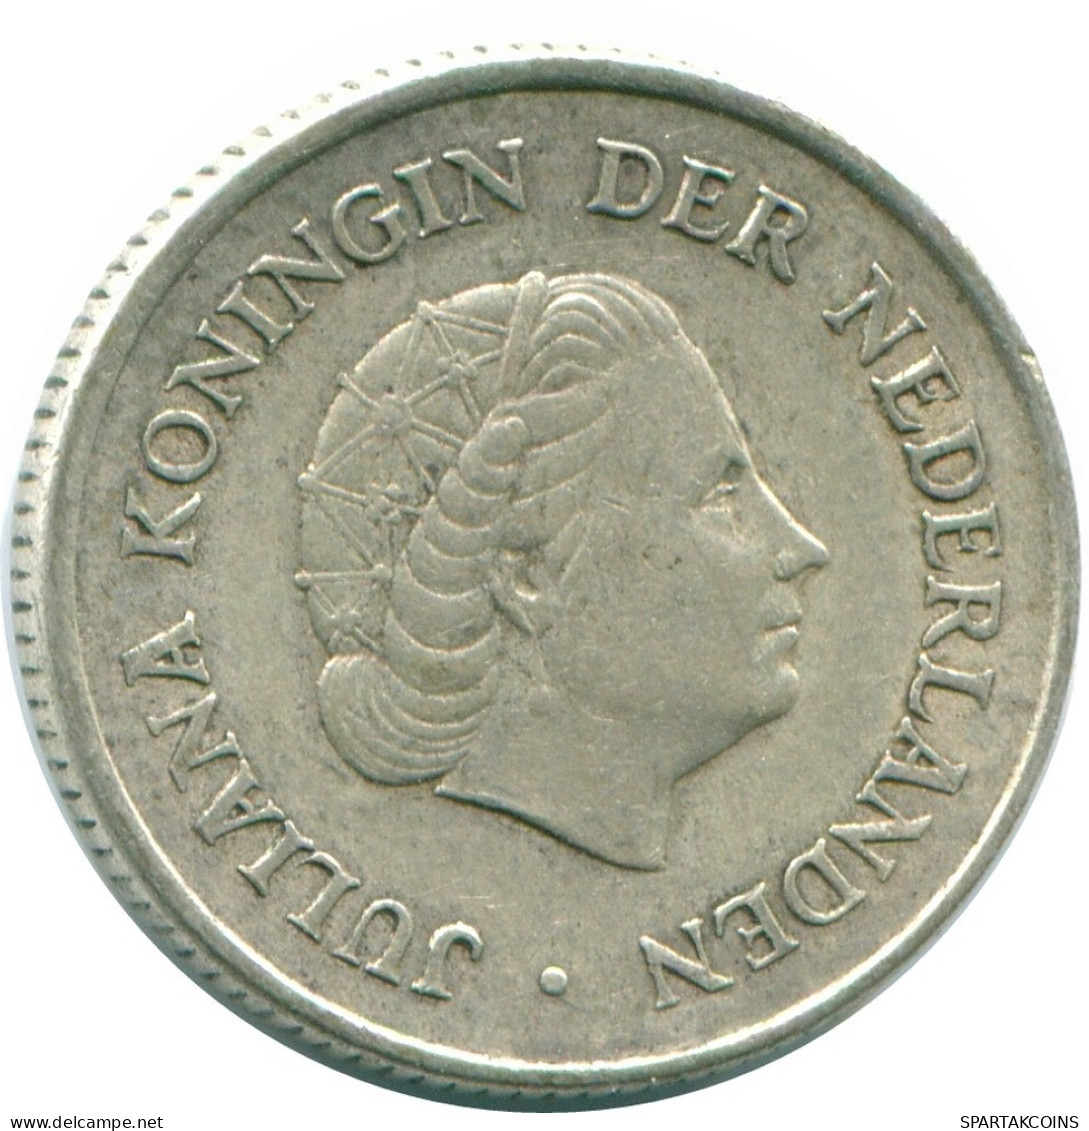 1/4 GULDEN 1967 NETHERLANDS ANTILLES SILVER Colonial Coin #NL11483.4.U.A - Antilles Néerlandaises